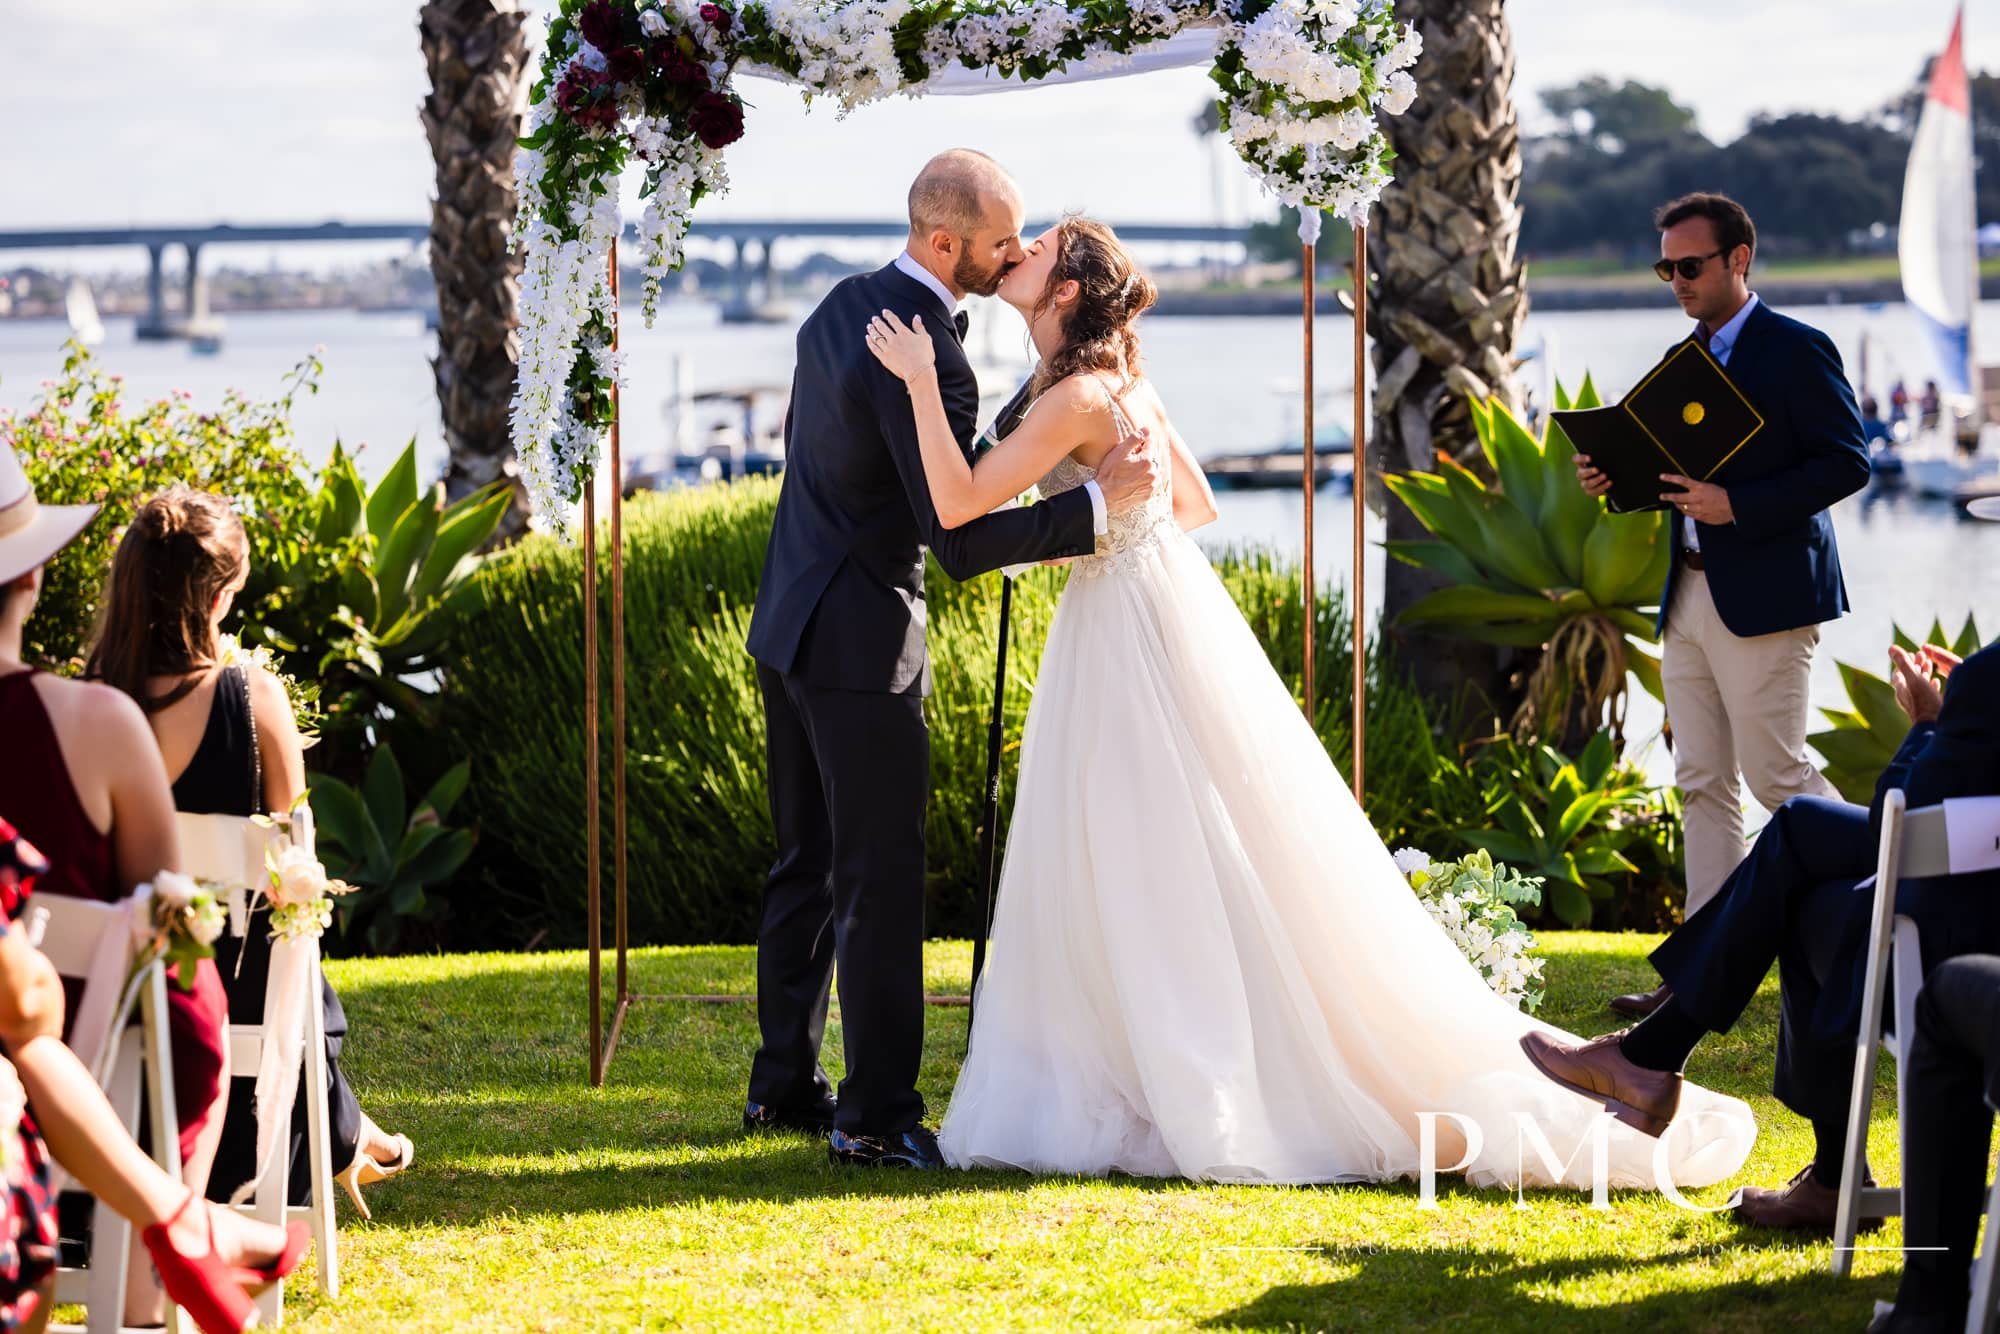 Paradise Point Resort & Spa - Summer Mission Bay Wedding - Best San Diego Wedding Photographer-56.jpg